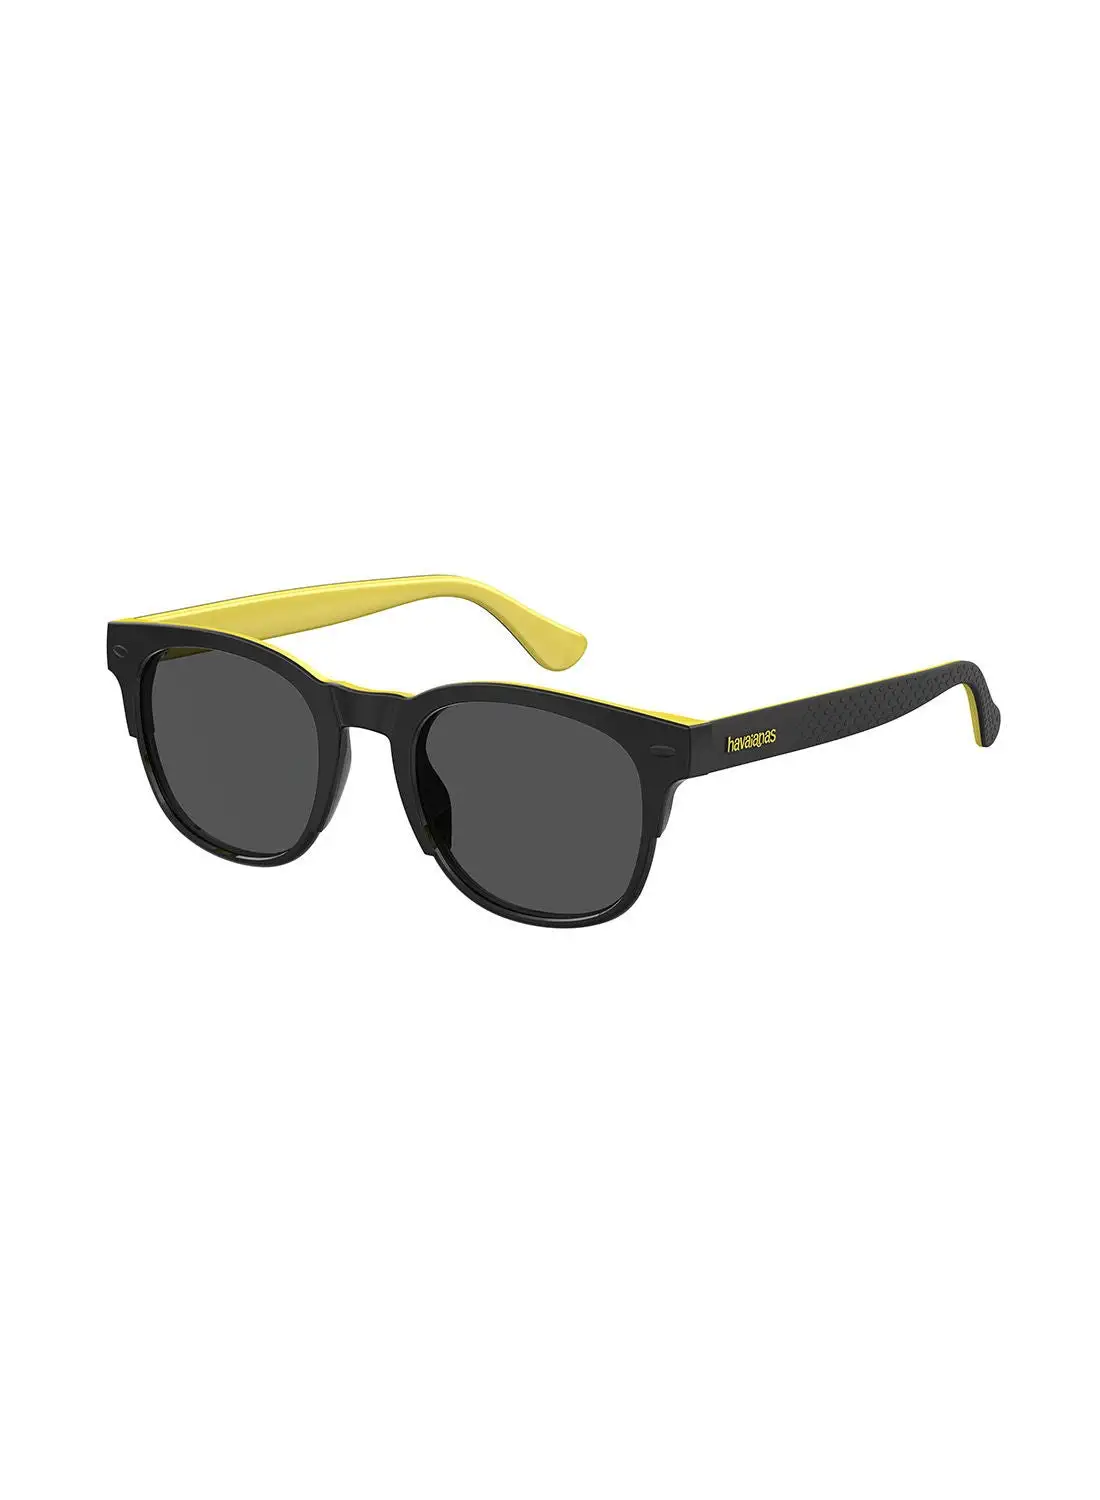 havaianas Unisex UV Protection Square Sunglasses - Angra Blck Yllw 51 - Lens Size: 51 Mm